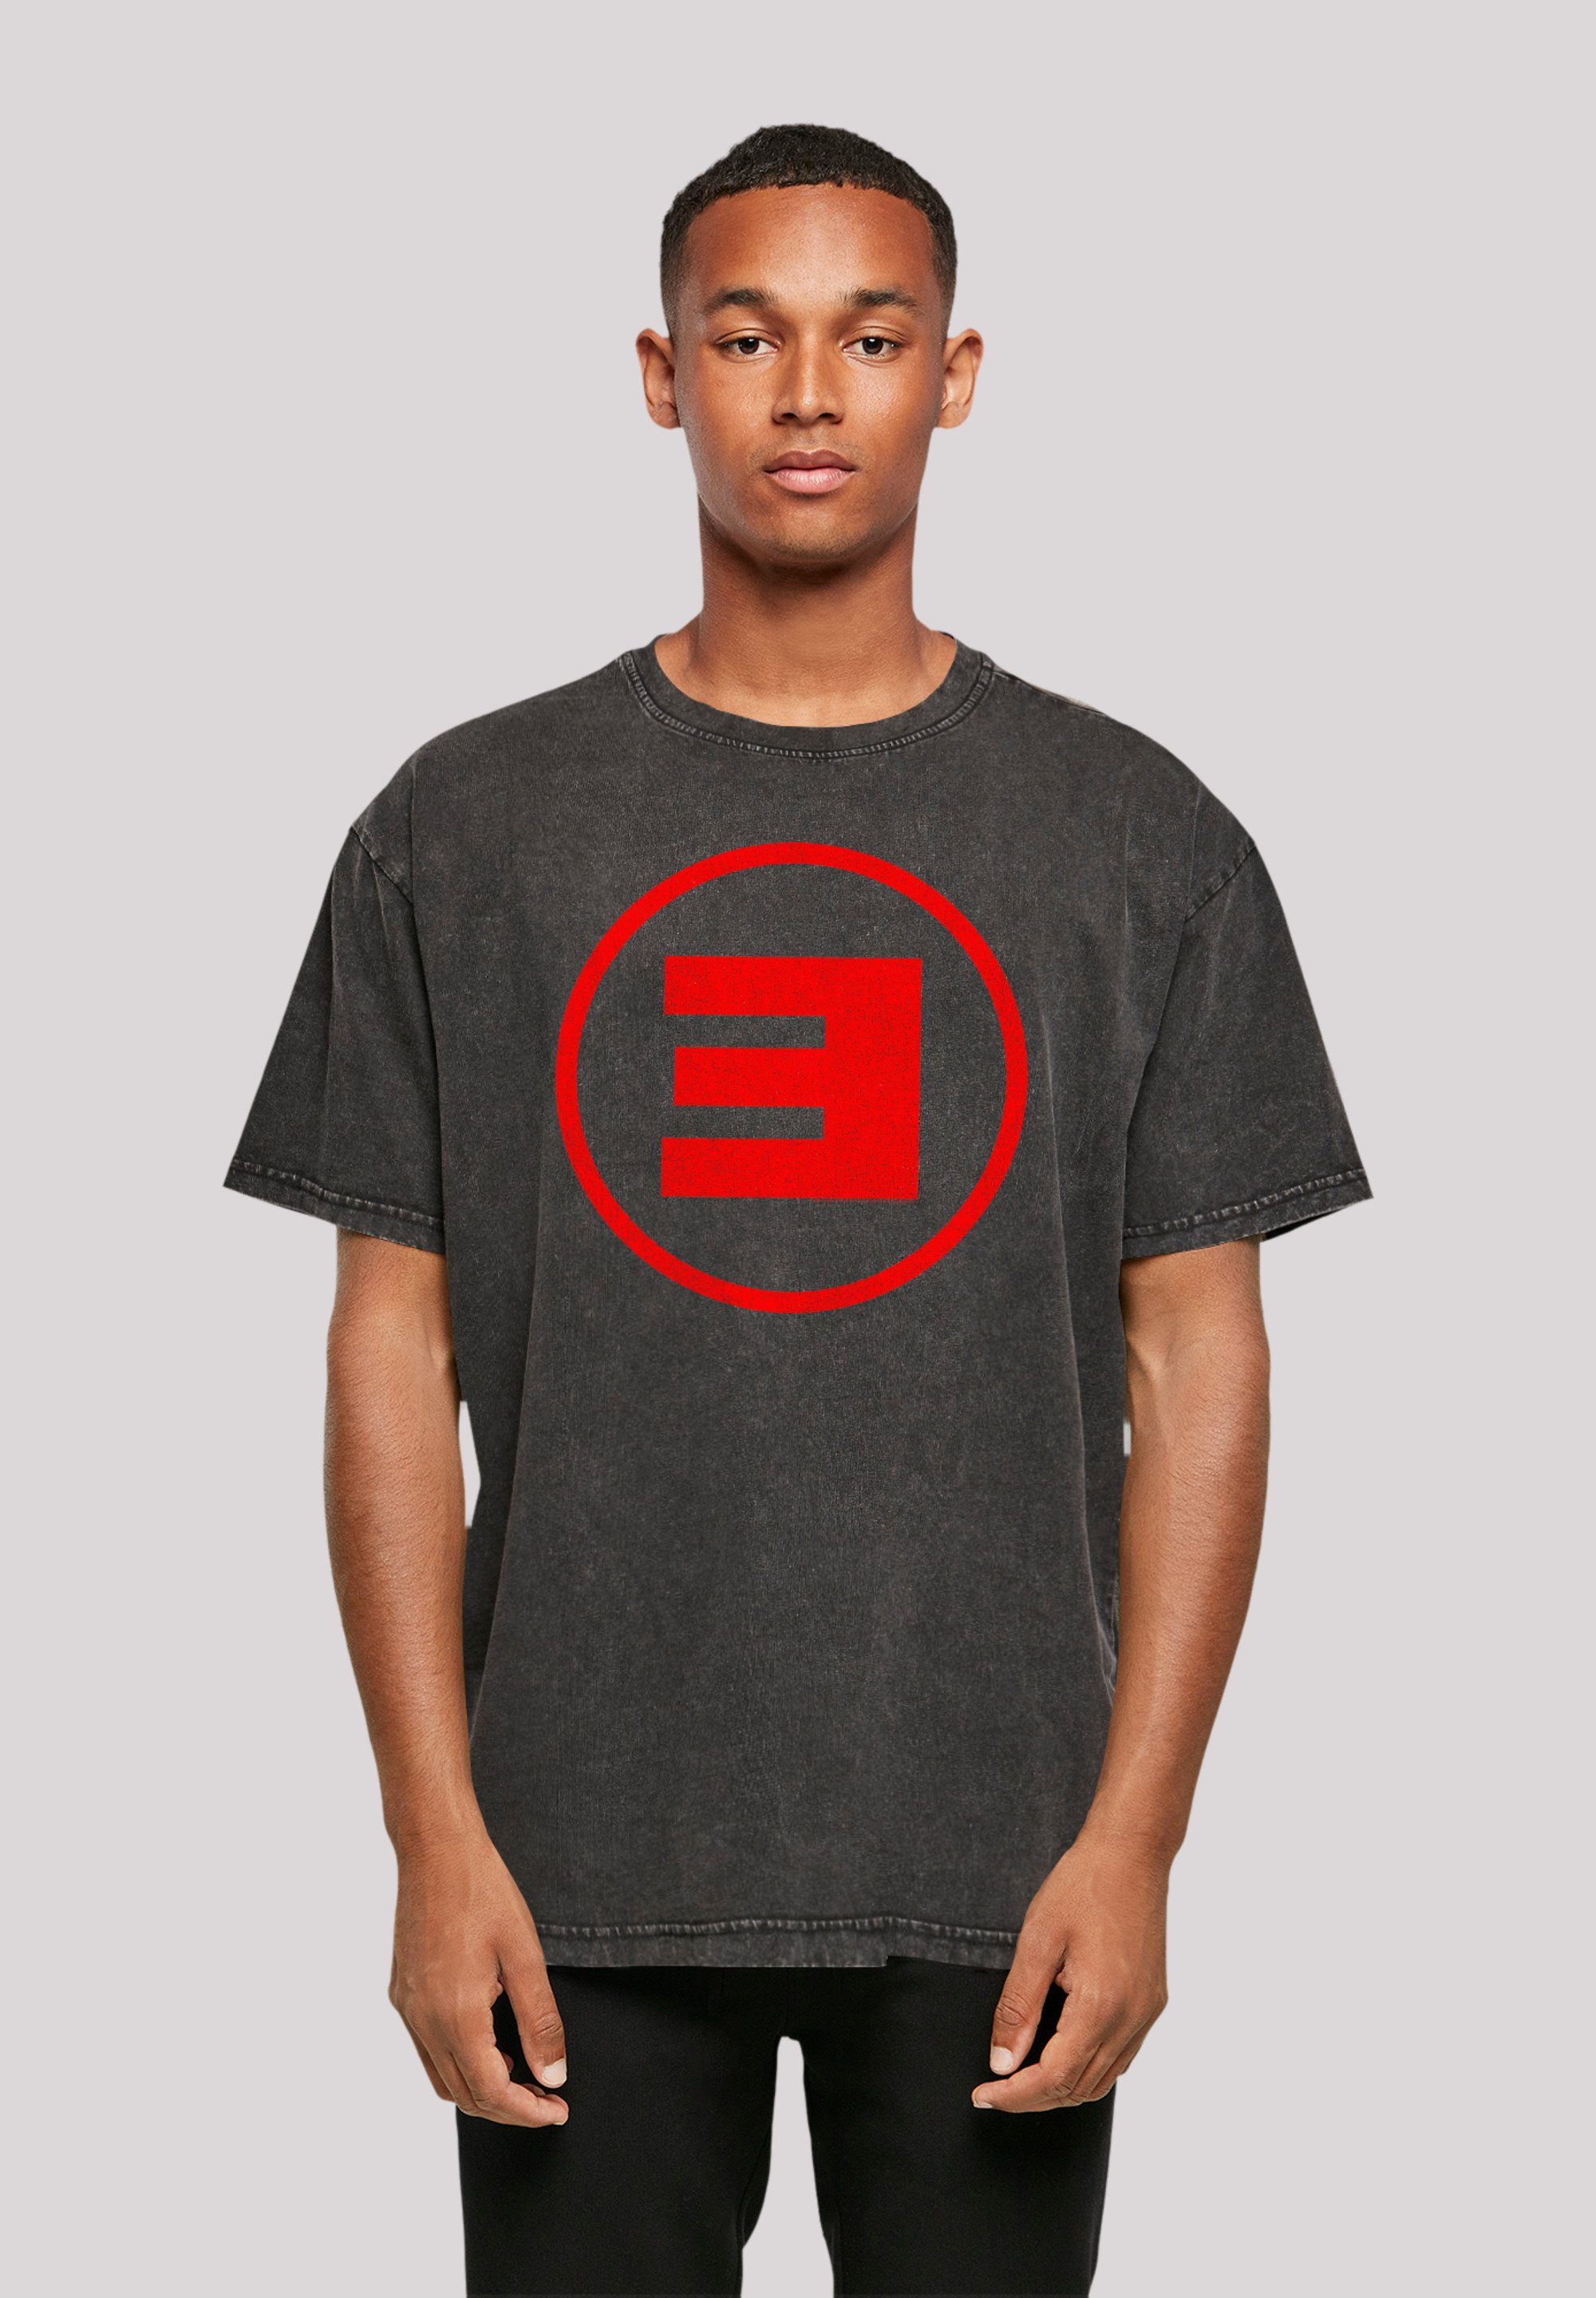 F4NT4STIC T-Shirt Eminem Circle E Rap Hip Hop Music Premium Qualität, Musik, By Rock Off schwarz